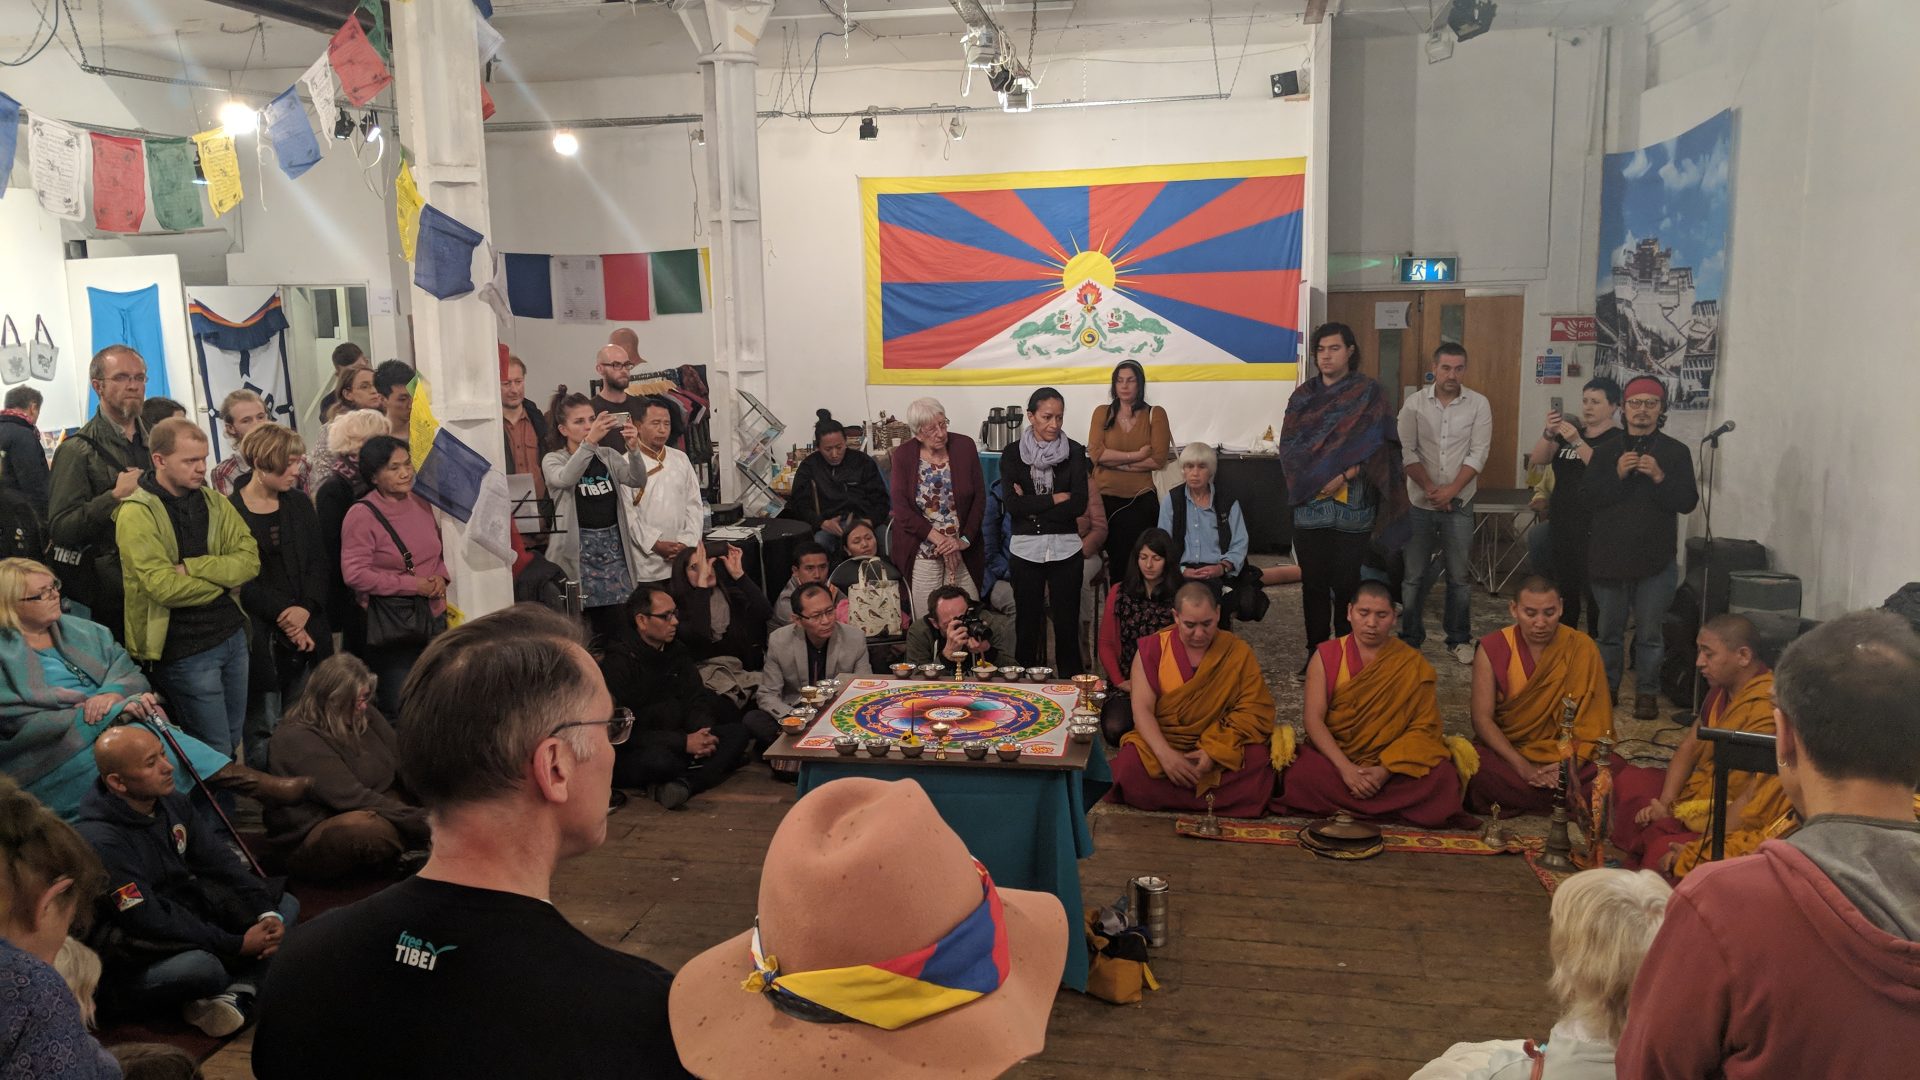 Tibetfest 2018 cultural event, London